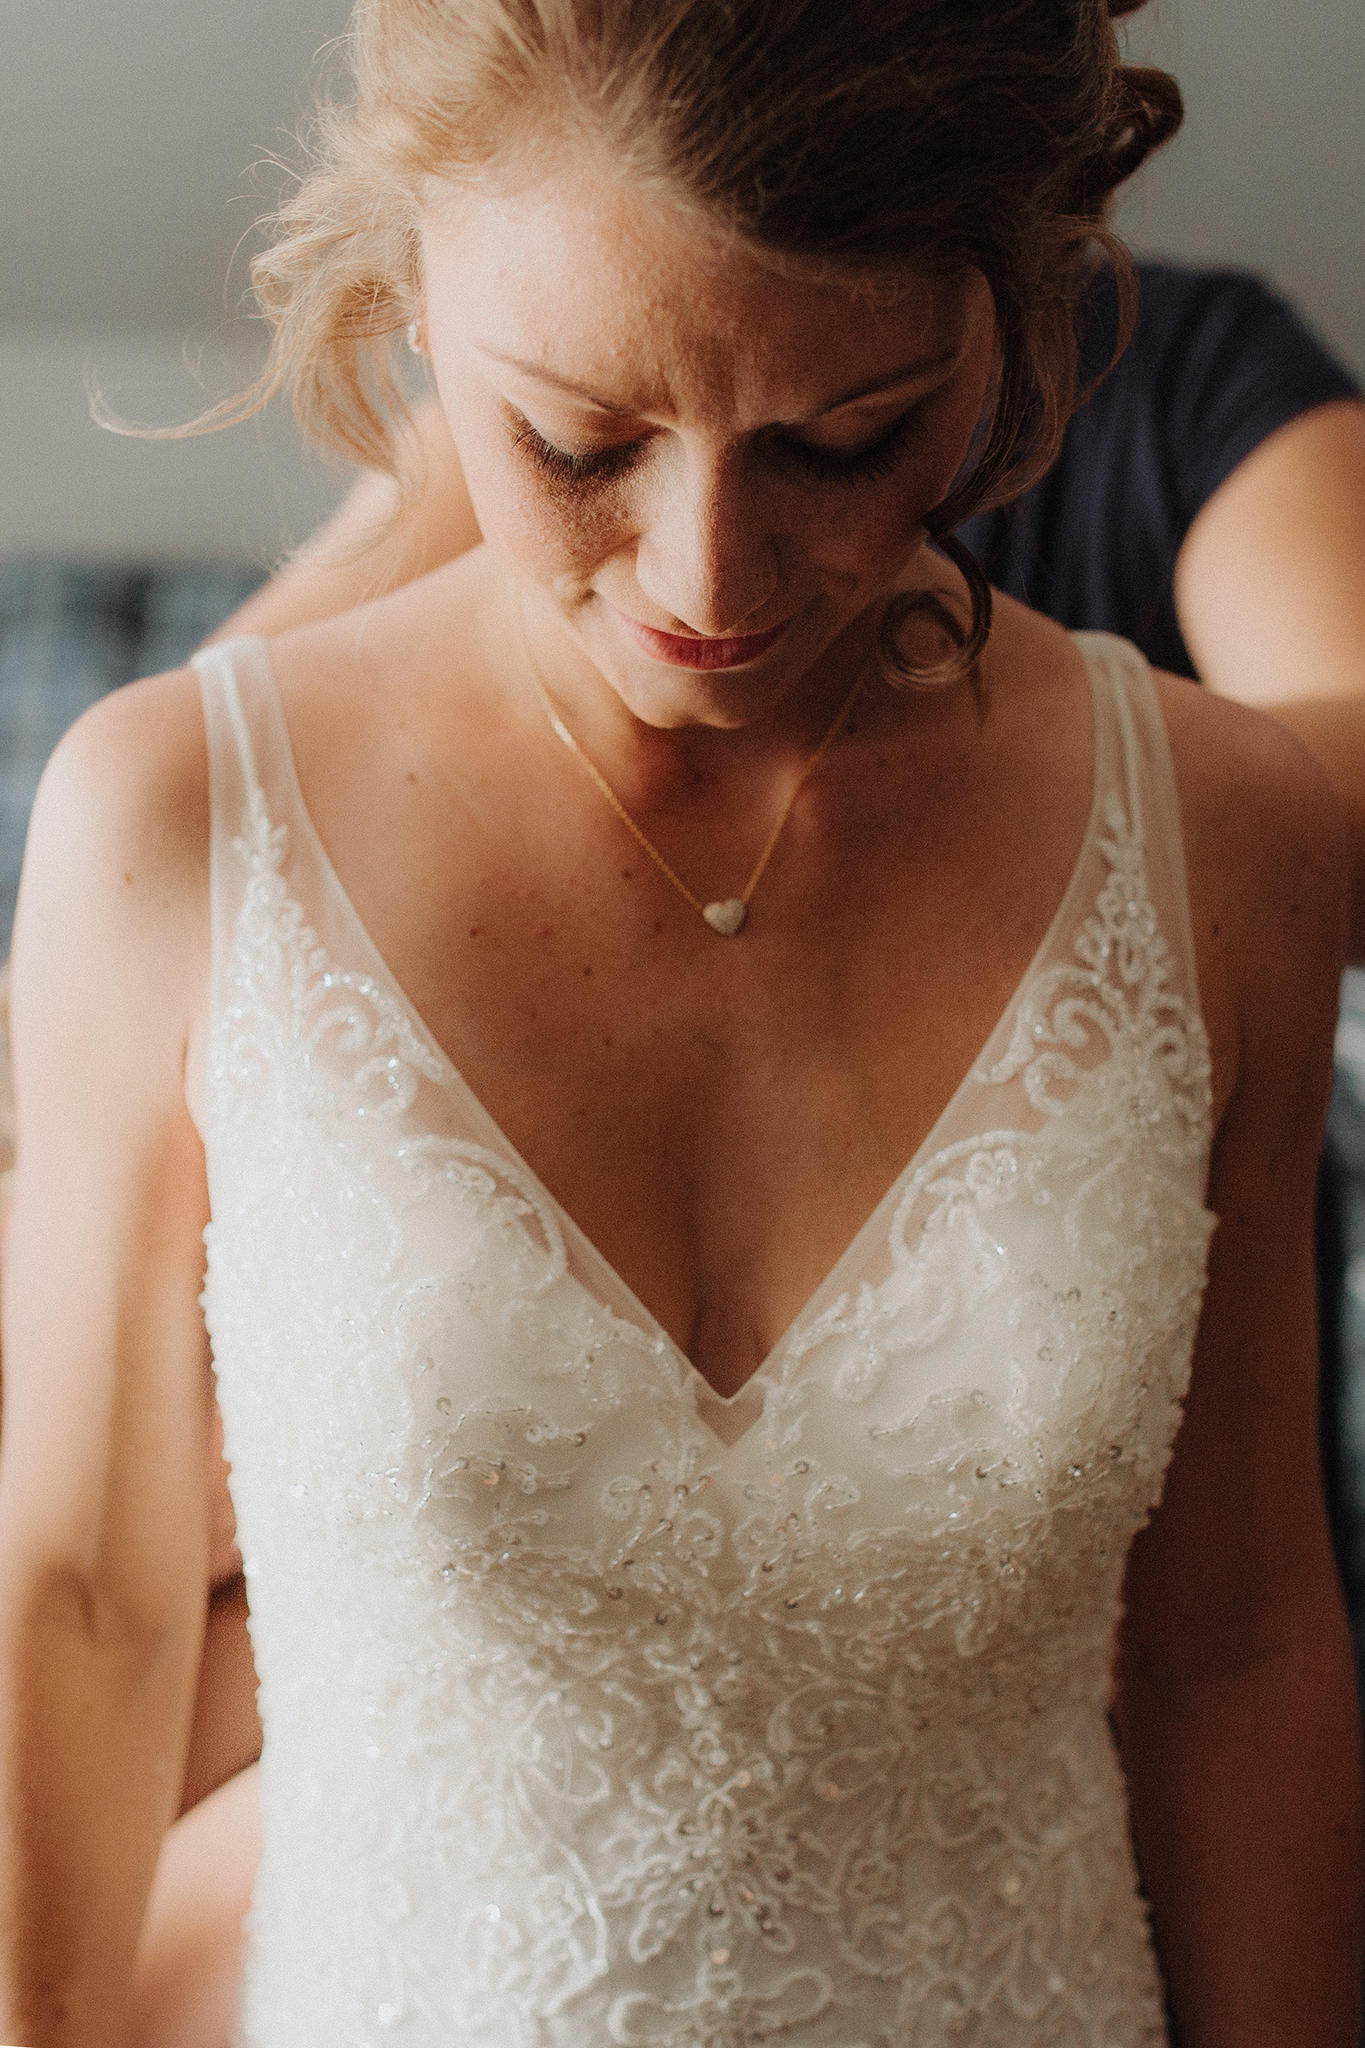 vermont-wedding-photographer-bride-getting-ready-1.jpg